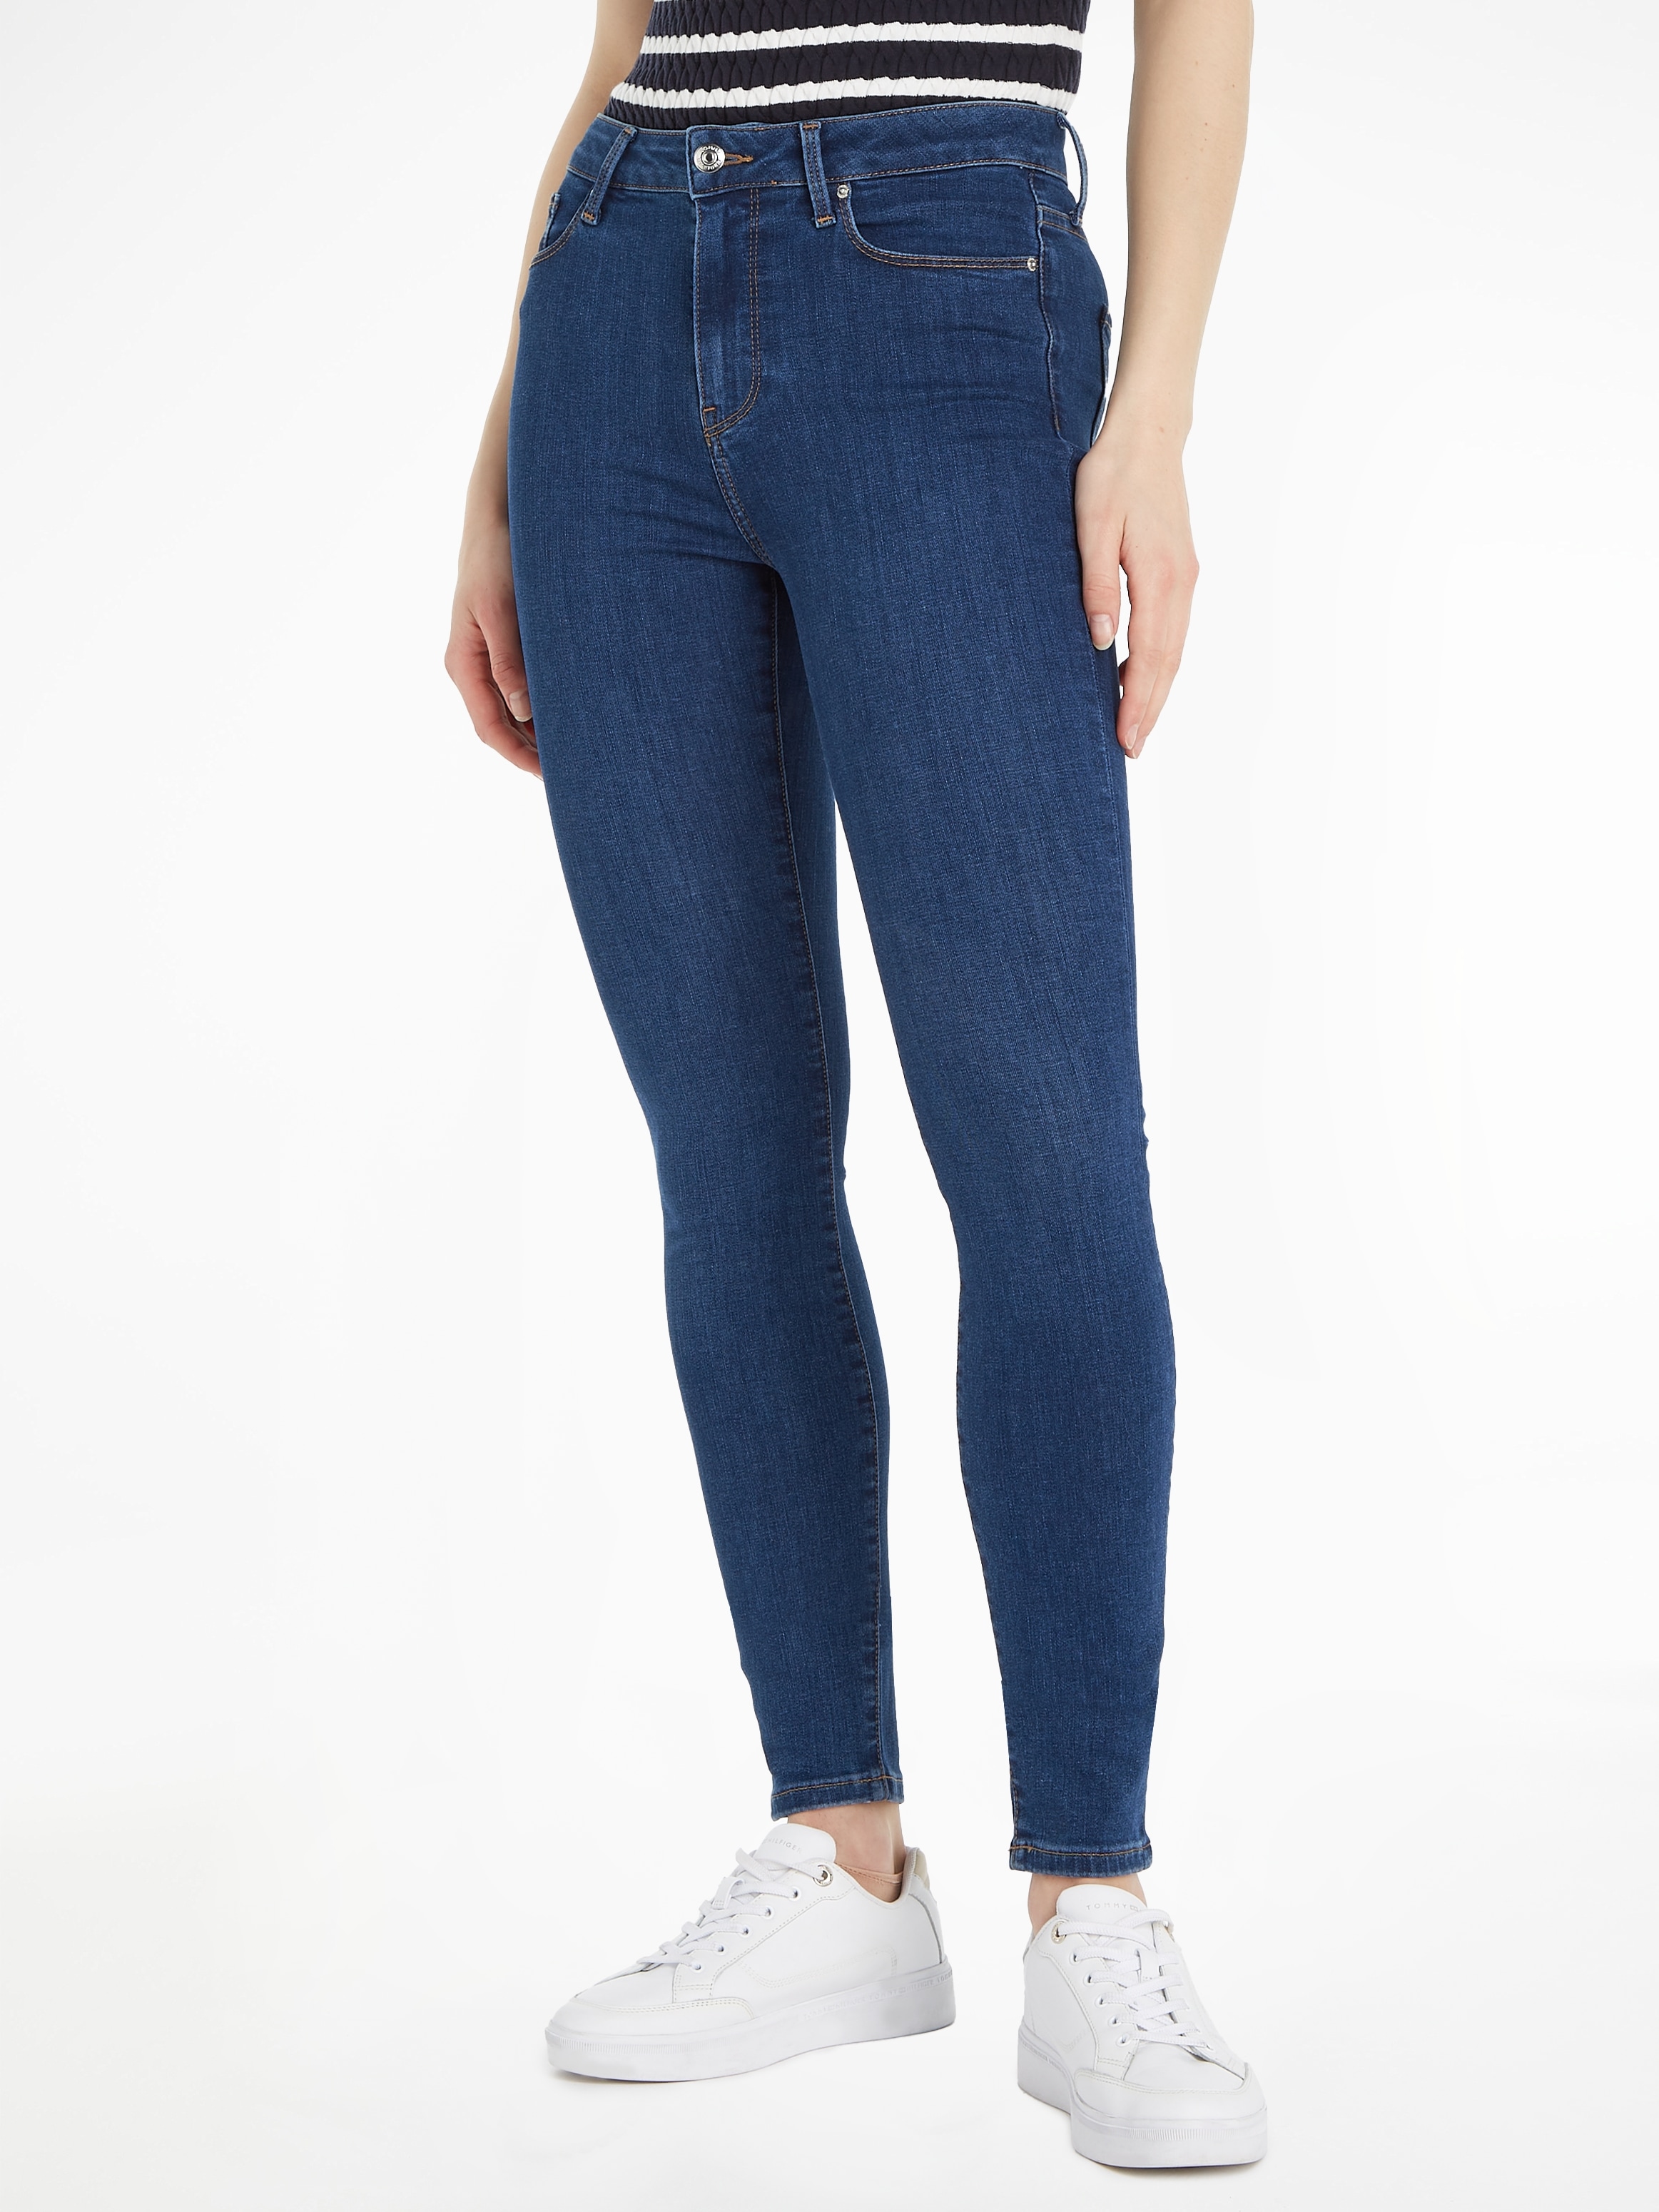 Skinny-fit-Jeans online »TH blauer kaufen SKINNY Tommy HW | HARLEM U FLEX in Waschung BAUR Hilfiger KAI«,